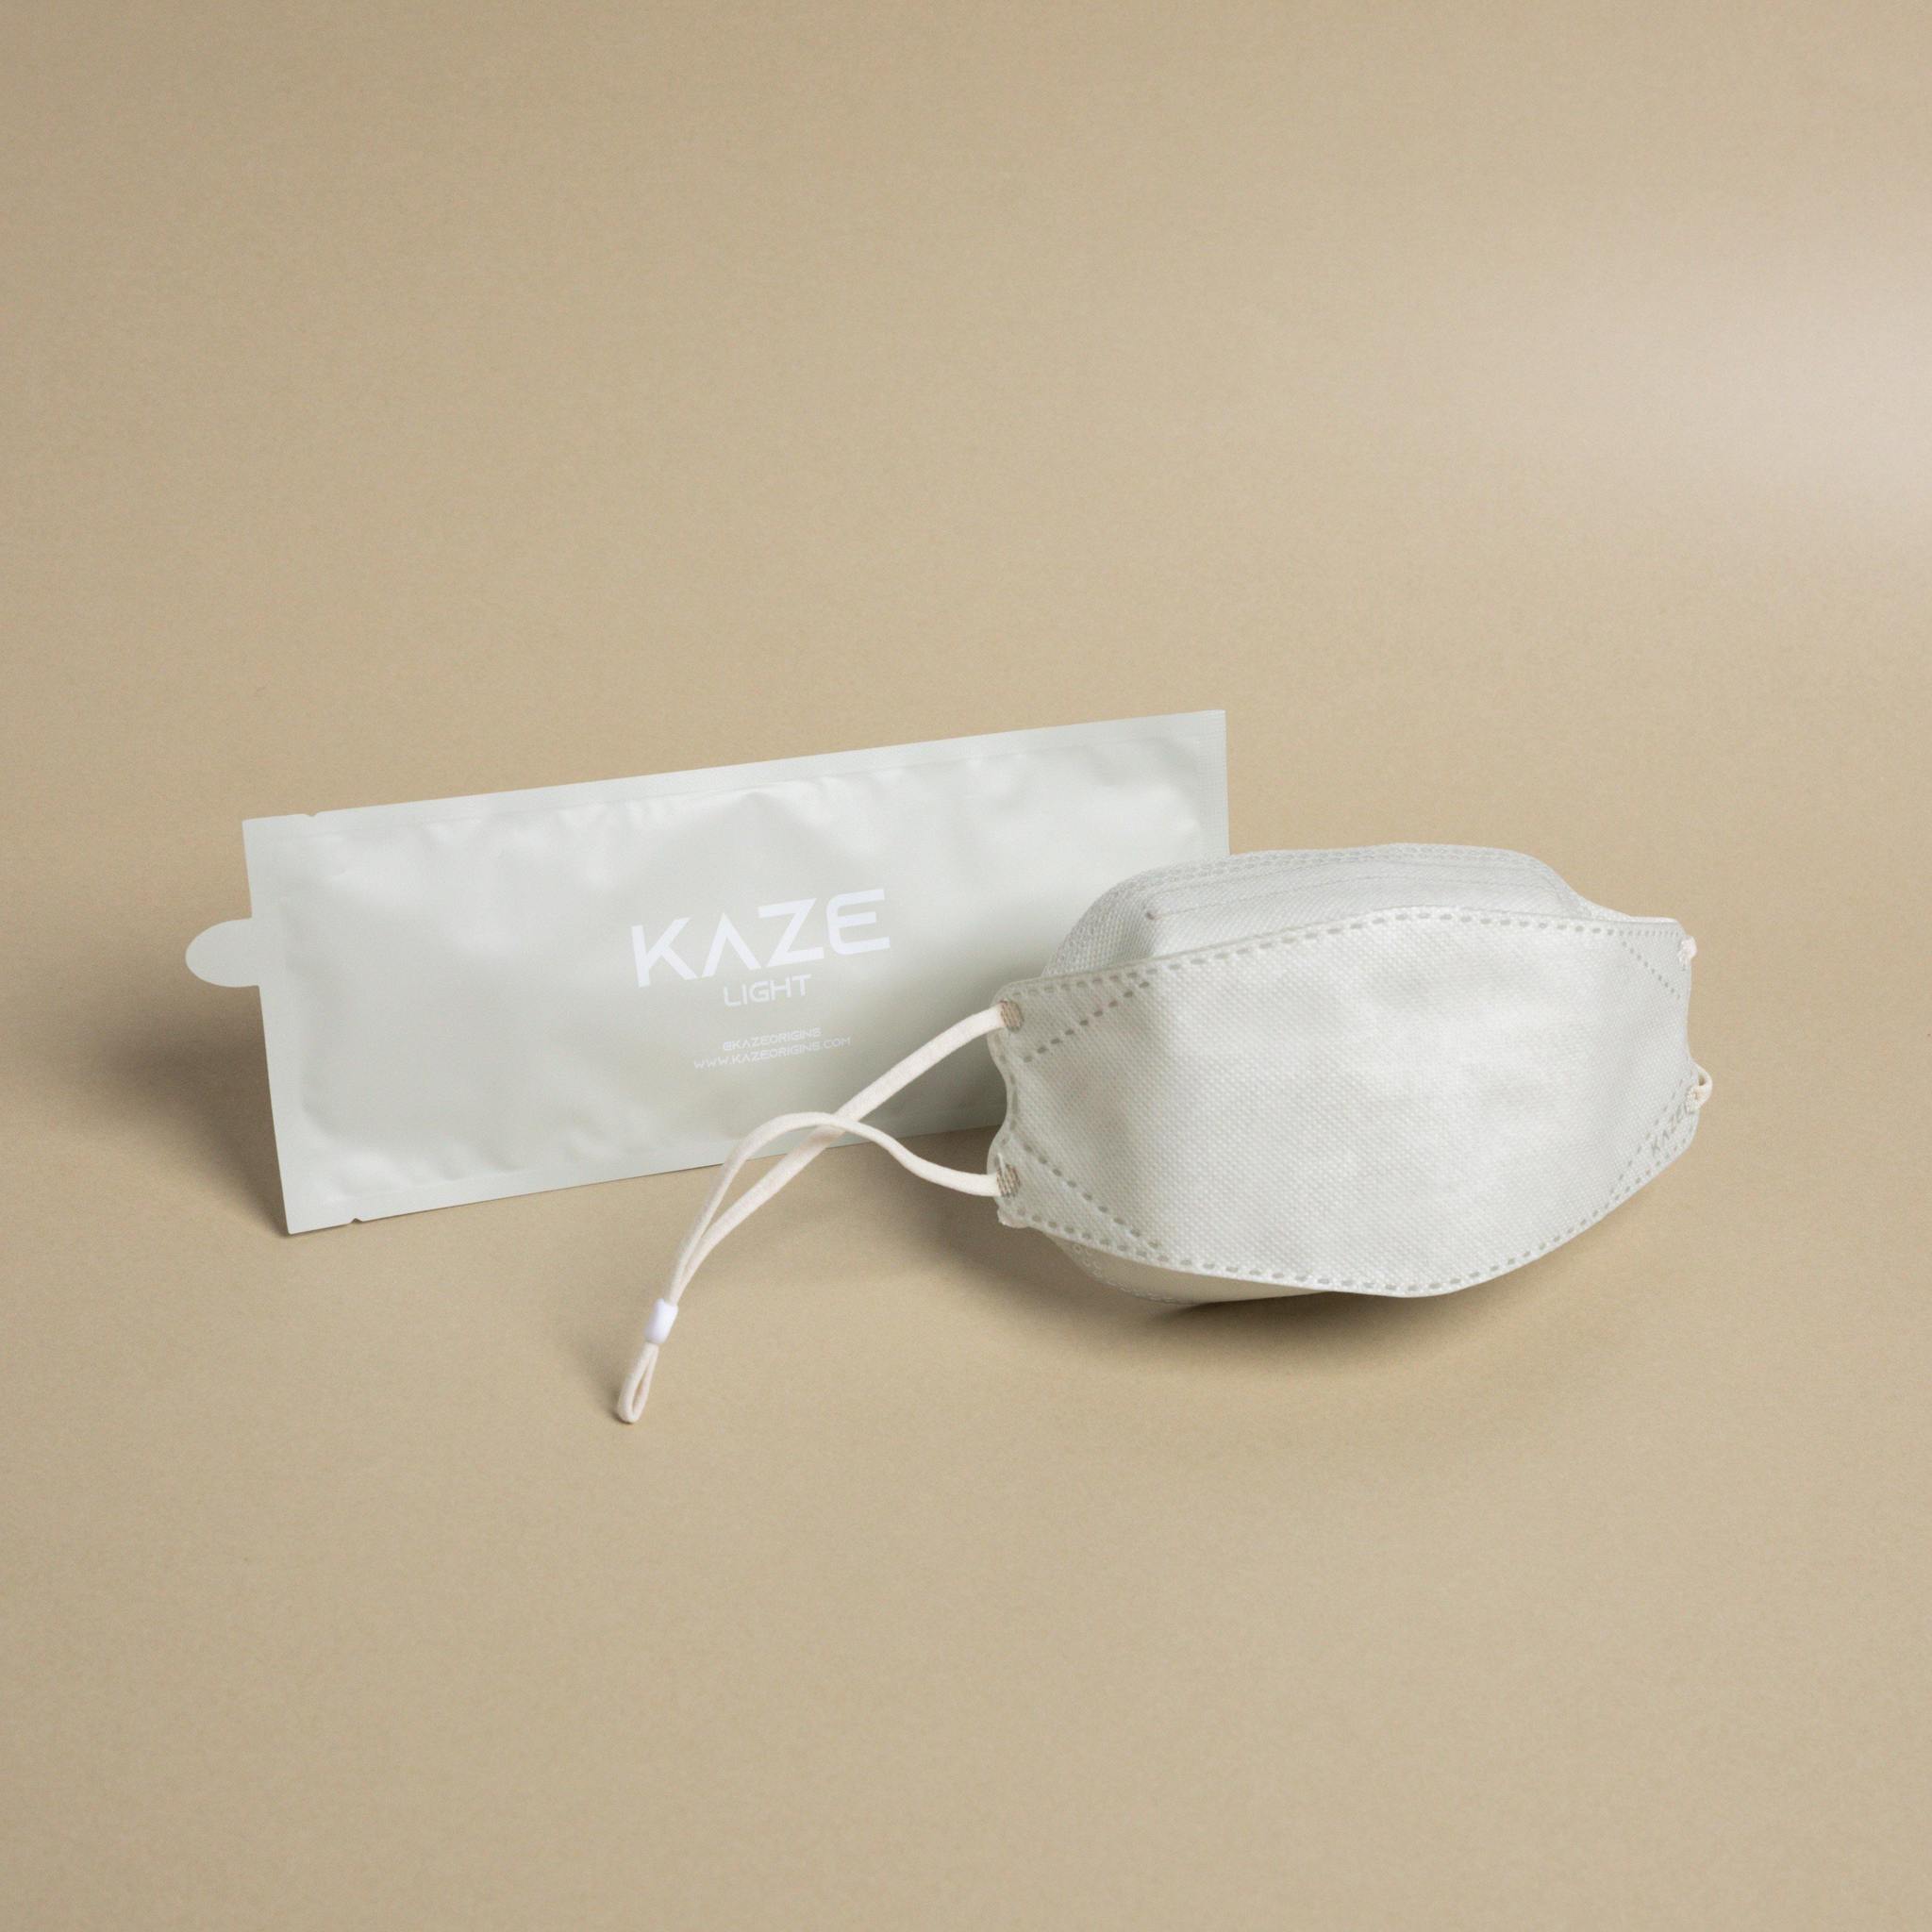 KAZE Masks - Light Individual Series - Silver Grey